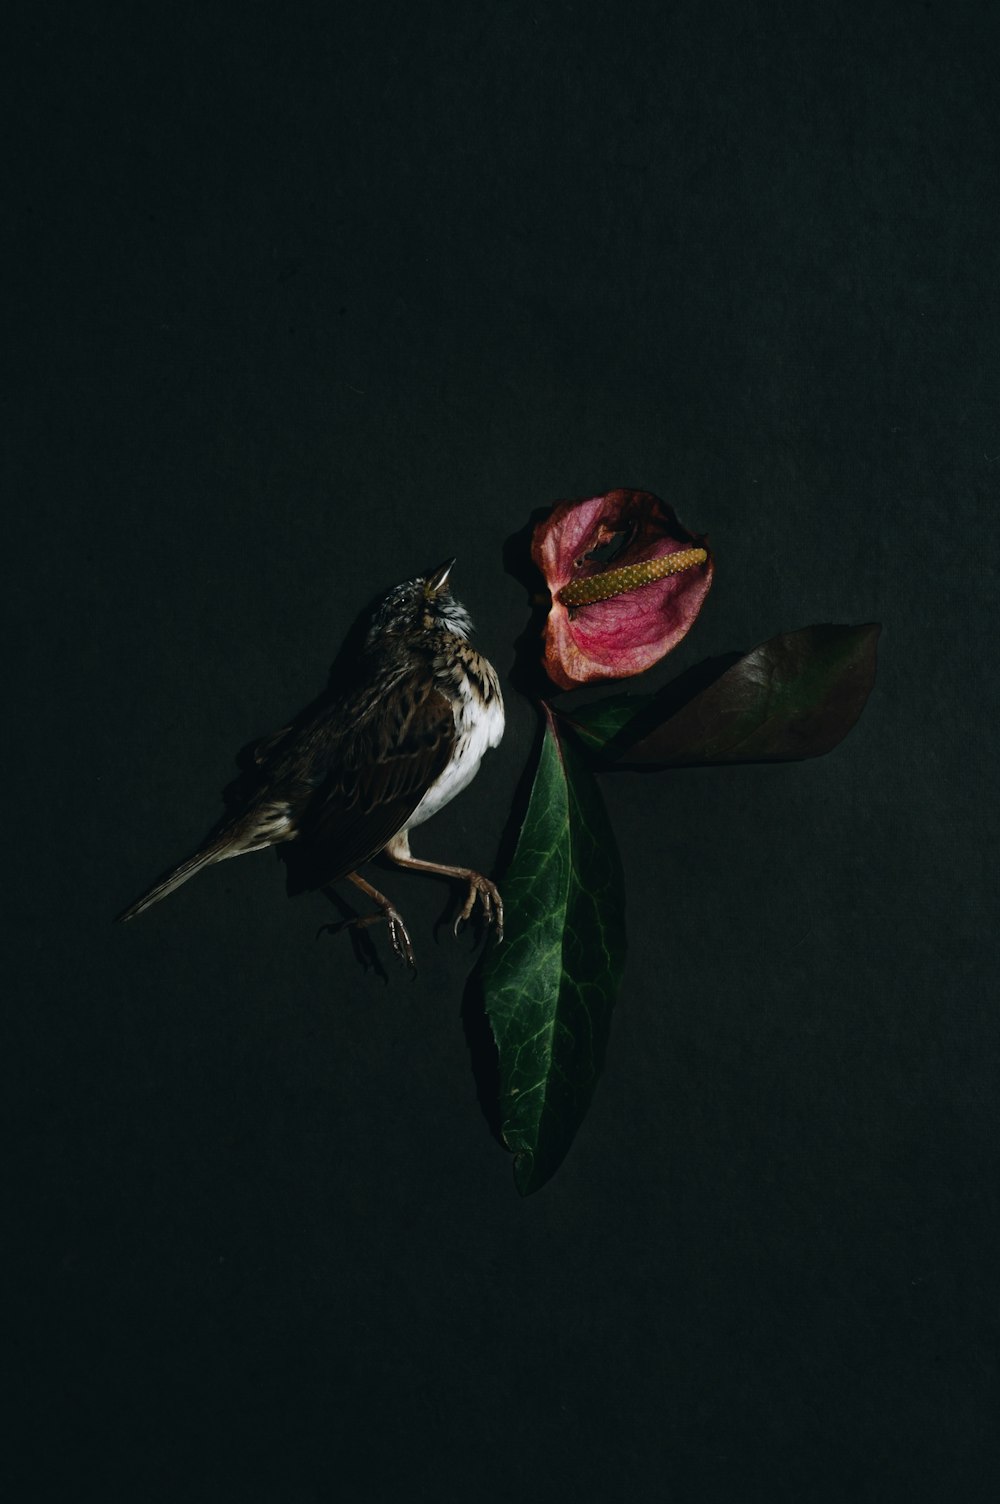 a bird with a rose